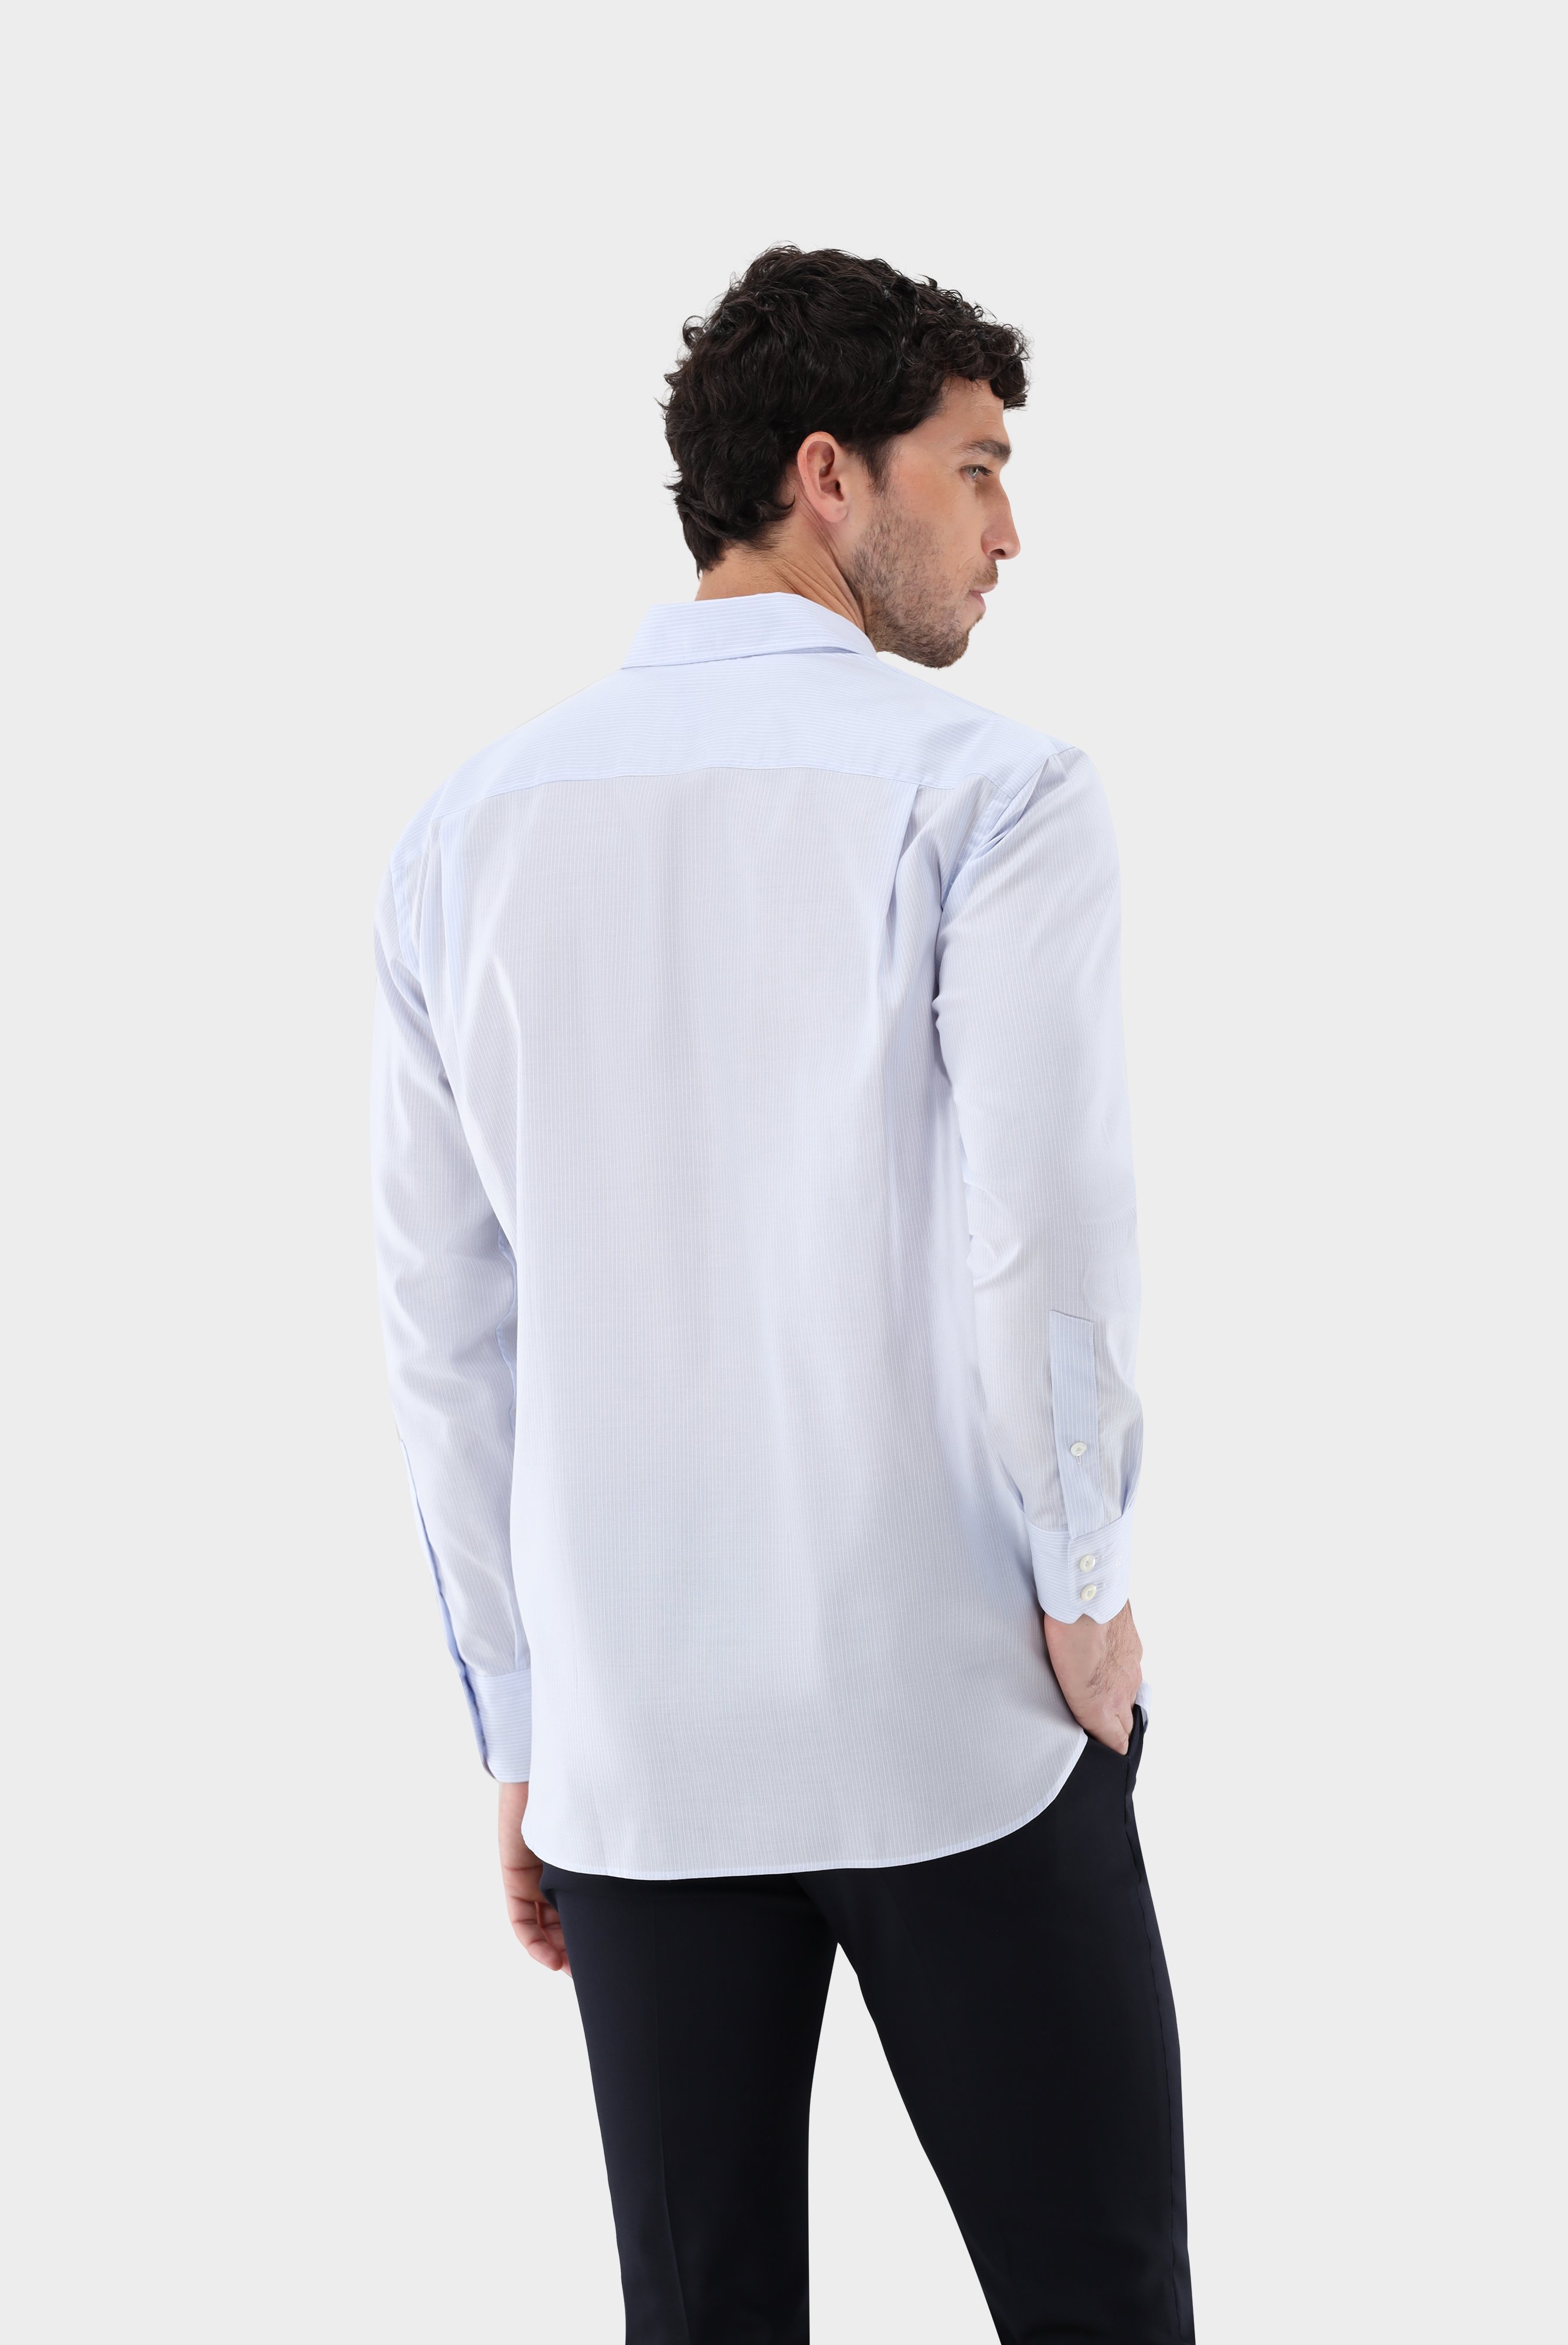 Easy Iron Shirts+Striped Wrinkle Free Shirt Comfort Fit+20.2026.BQ.161109.710.39